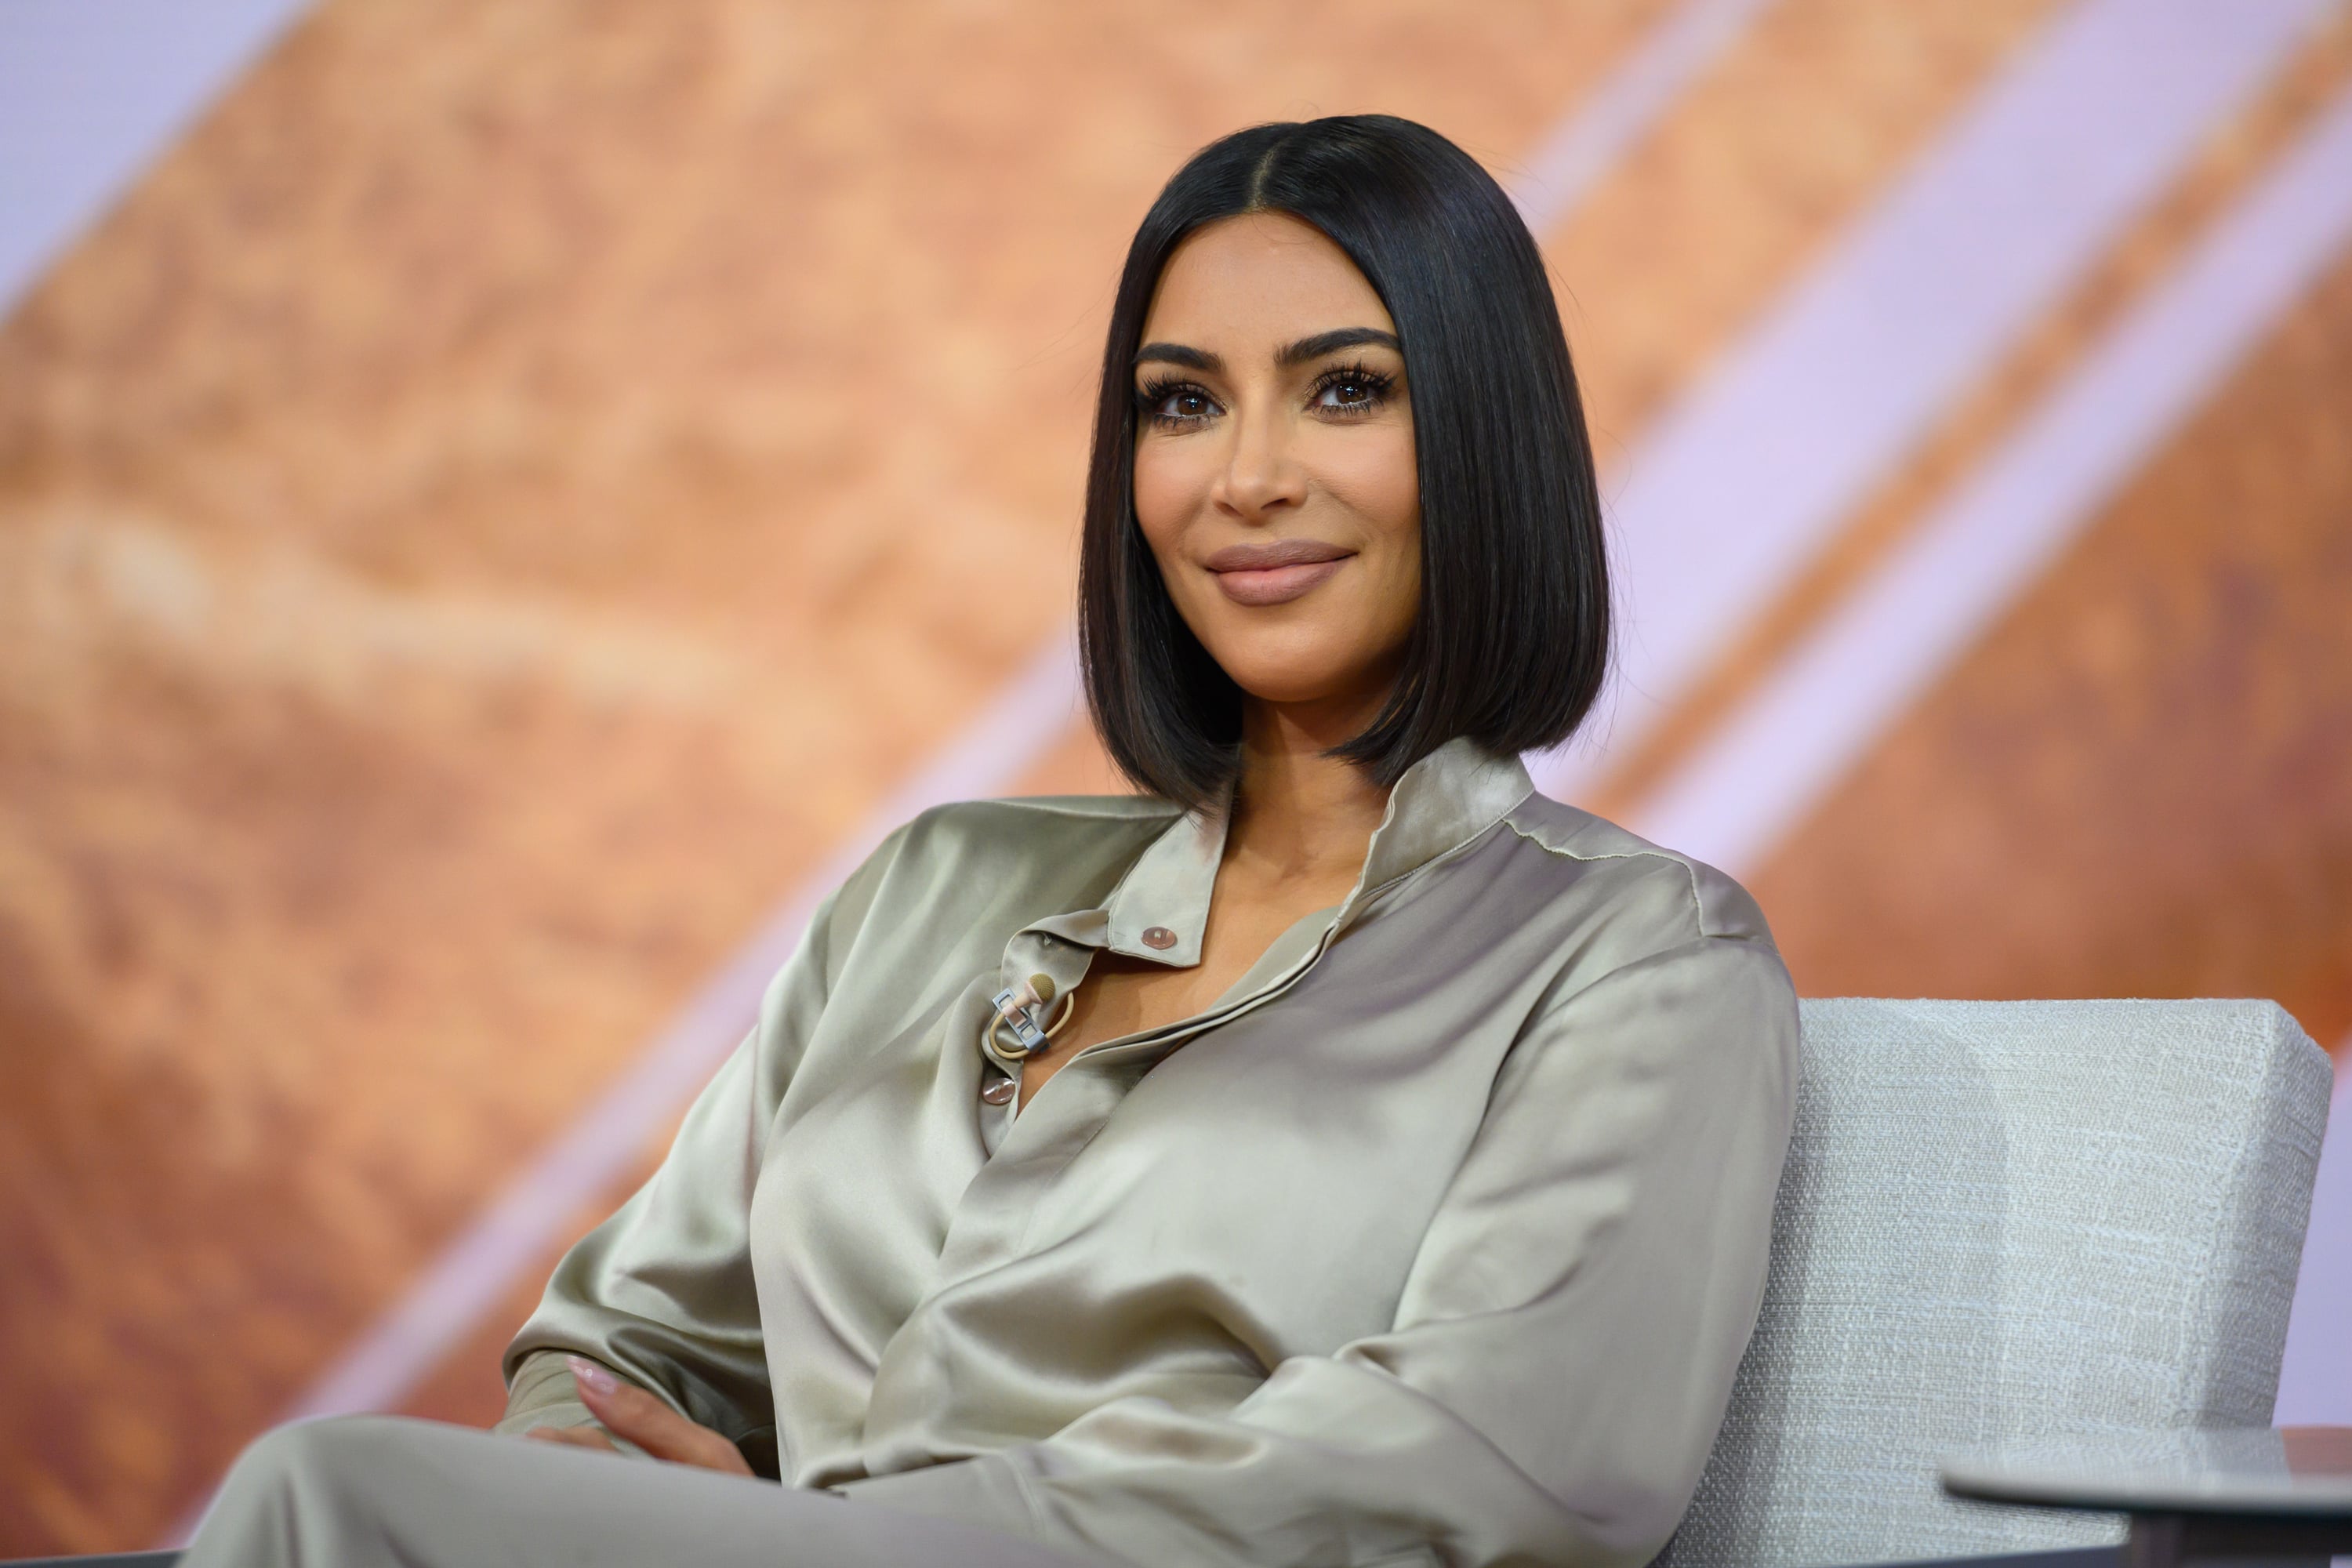 What it's really like wearing Kim Kardashian's caution tape dress